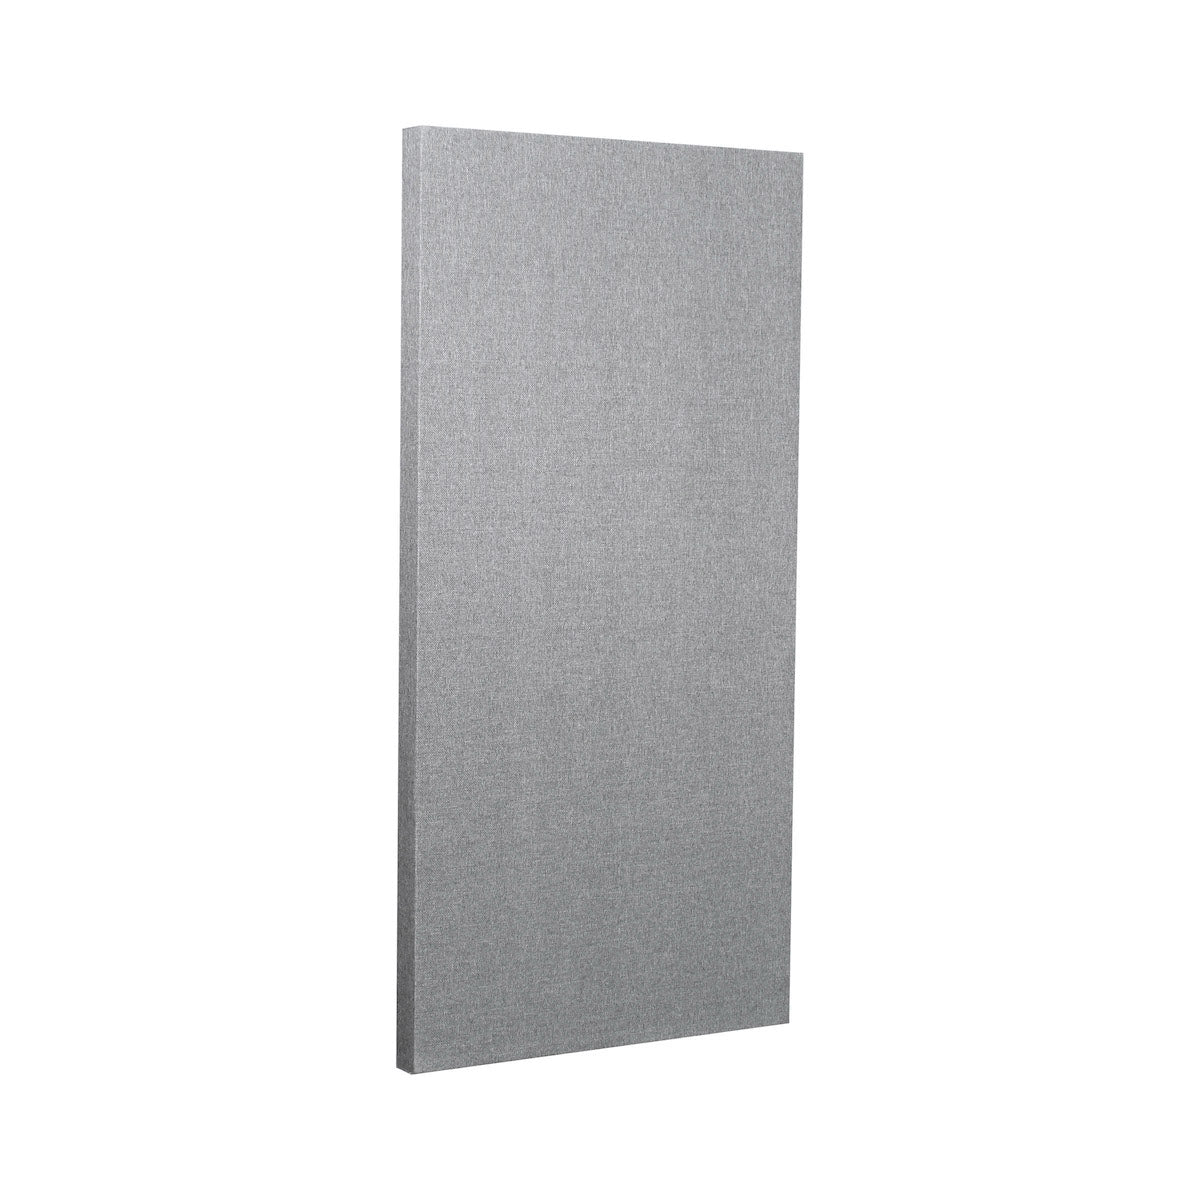 Primacoustic Hercules - Impact-Resistant Acoustic Panels, grey